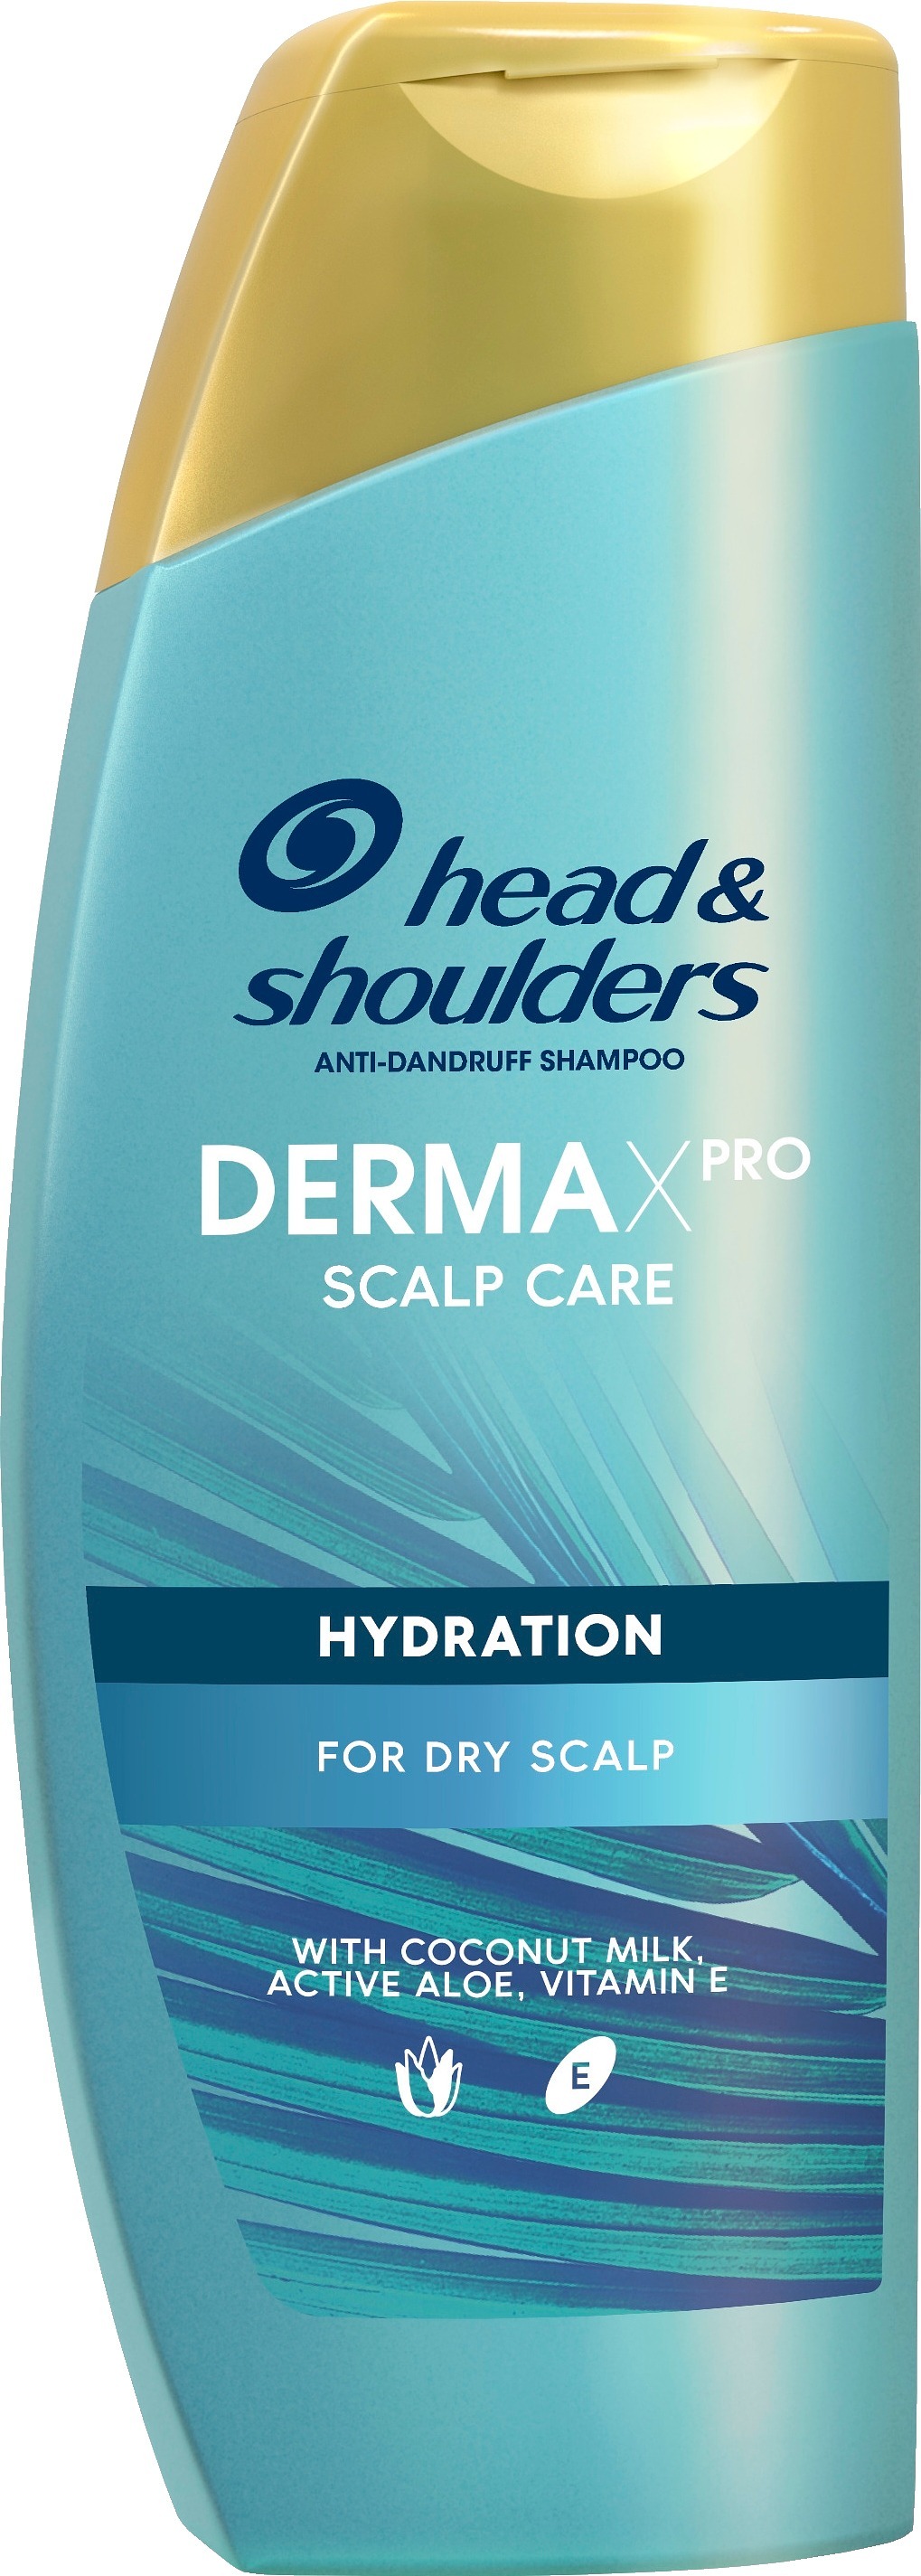 Head & Shoulders DermaX Scalp Care Hydration Shampoo 225 ml